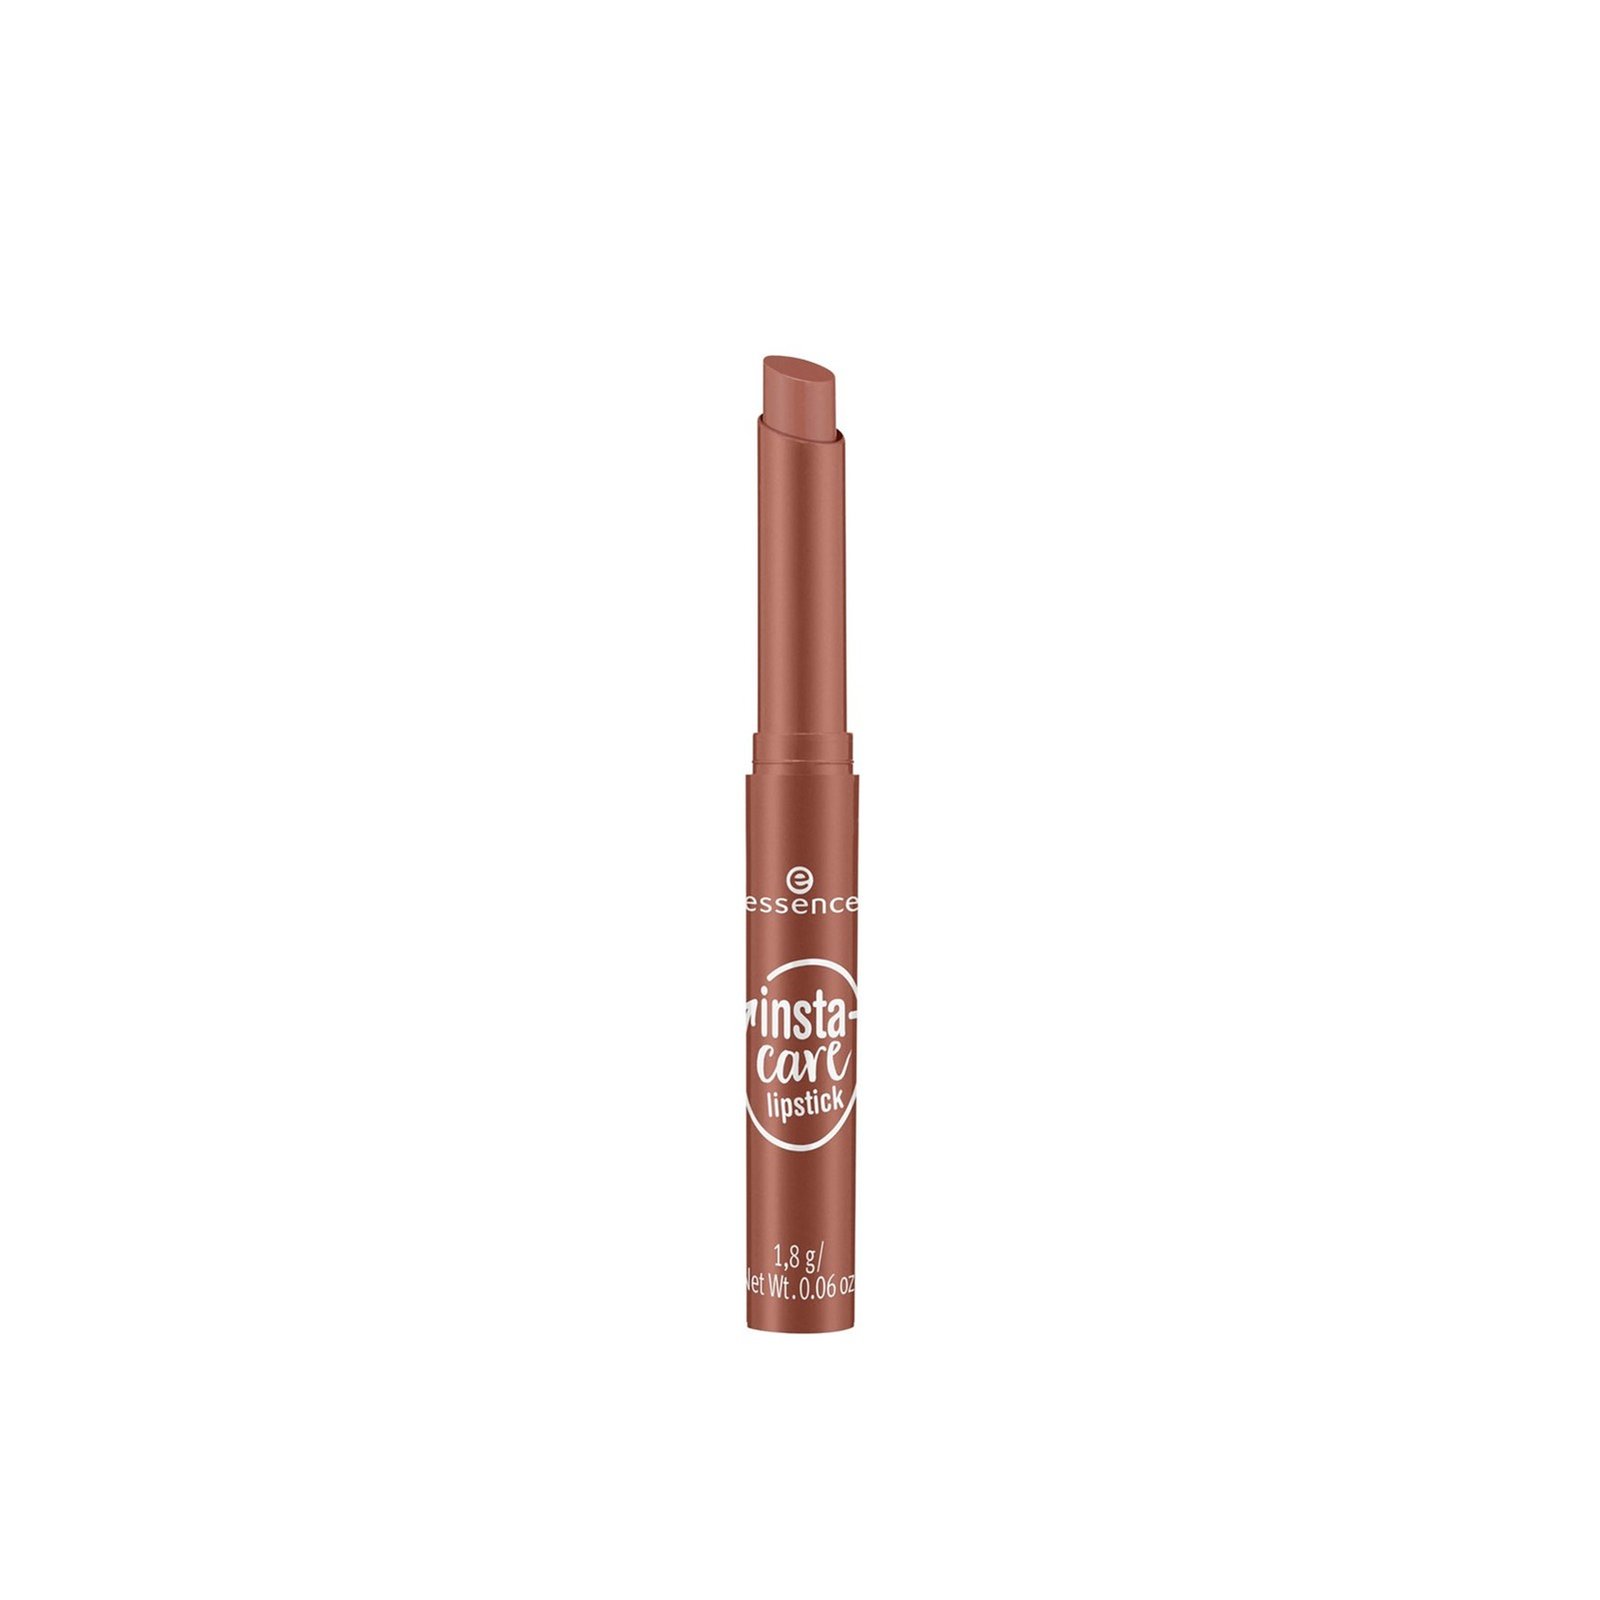 essence Insta-Care Lipstick 01 Sandy Sunrise 1.8g (0.06 oz)